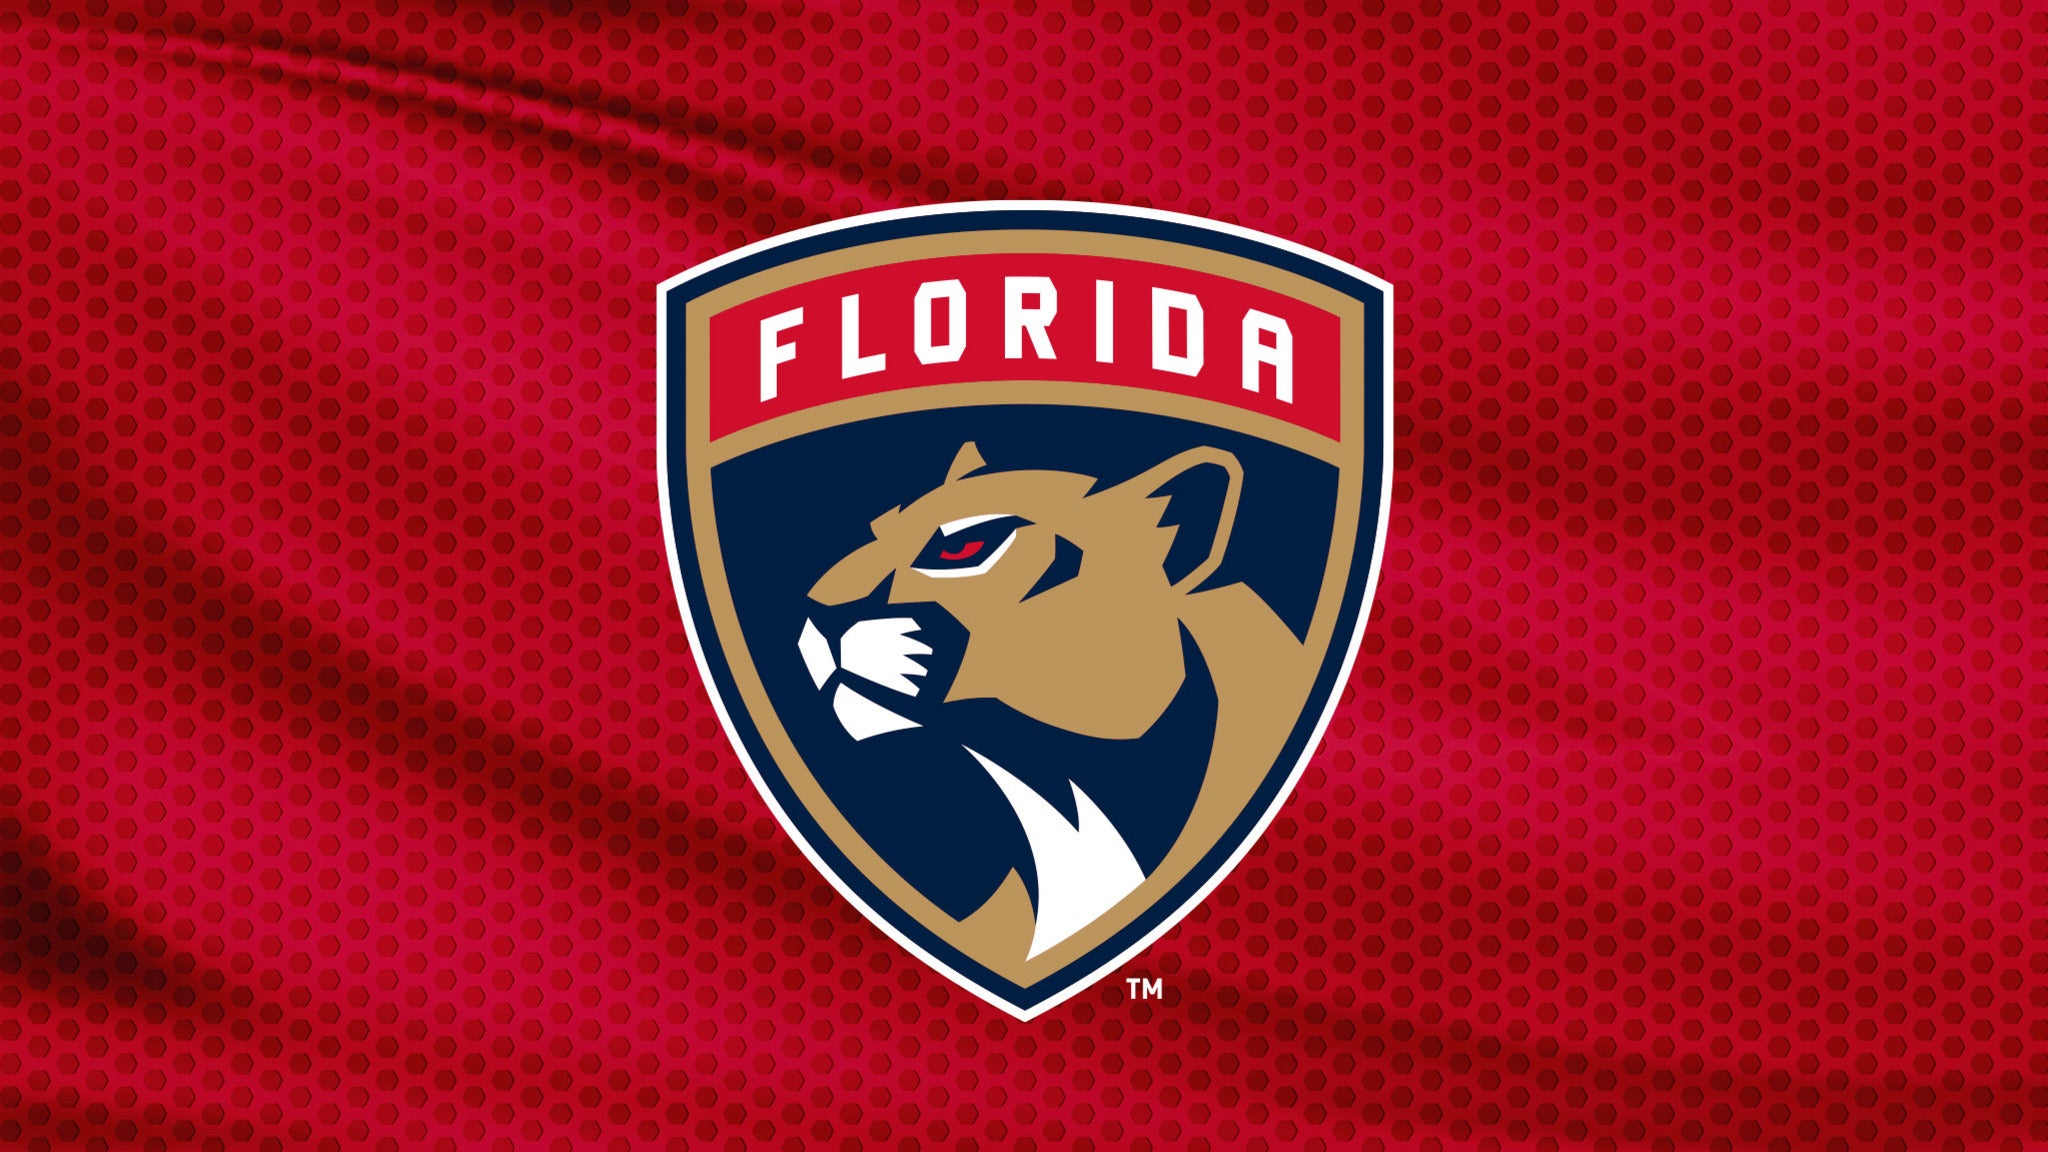 Florida Panthers vs. Columbus Blue Jackets at FLA Live Arena - Sunrise, FL 33323